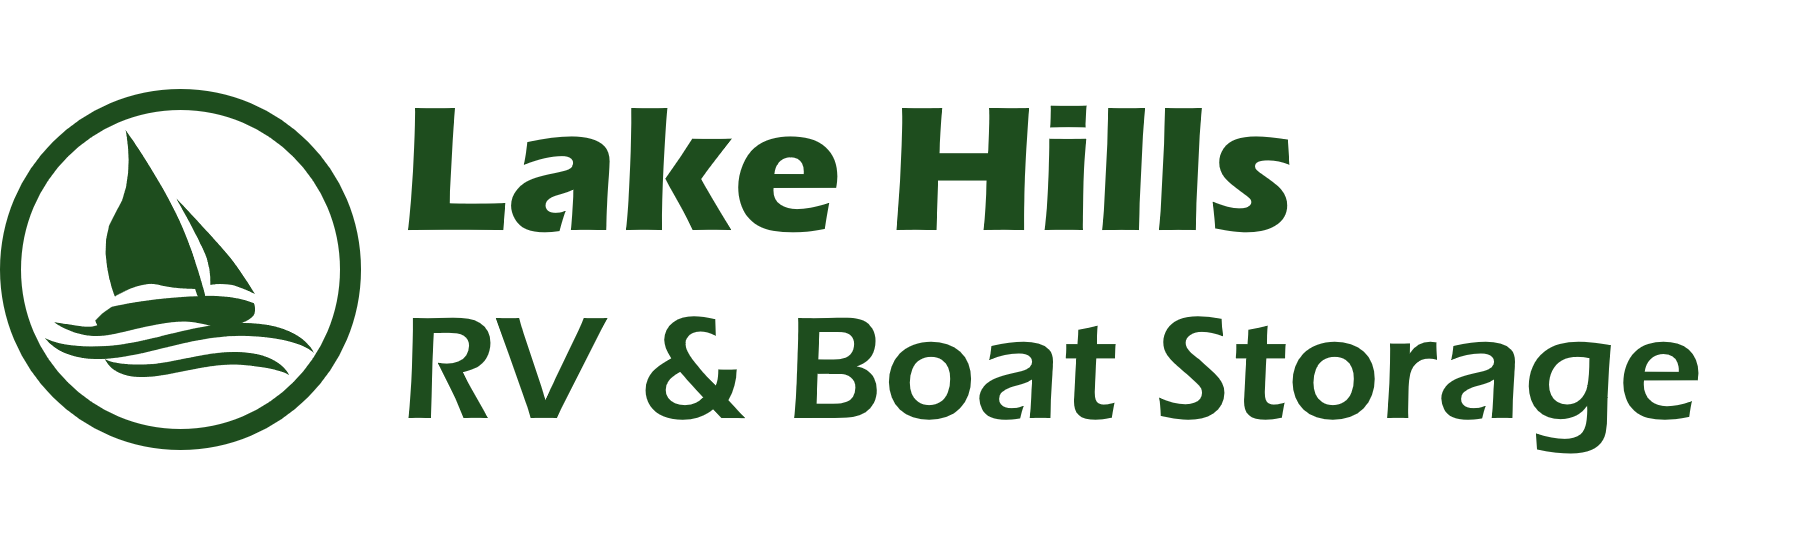 Lake Hills RV & Boat Storage